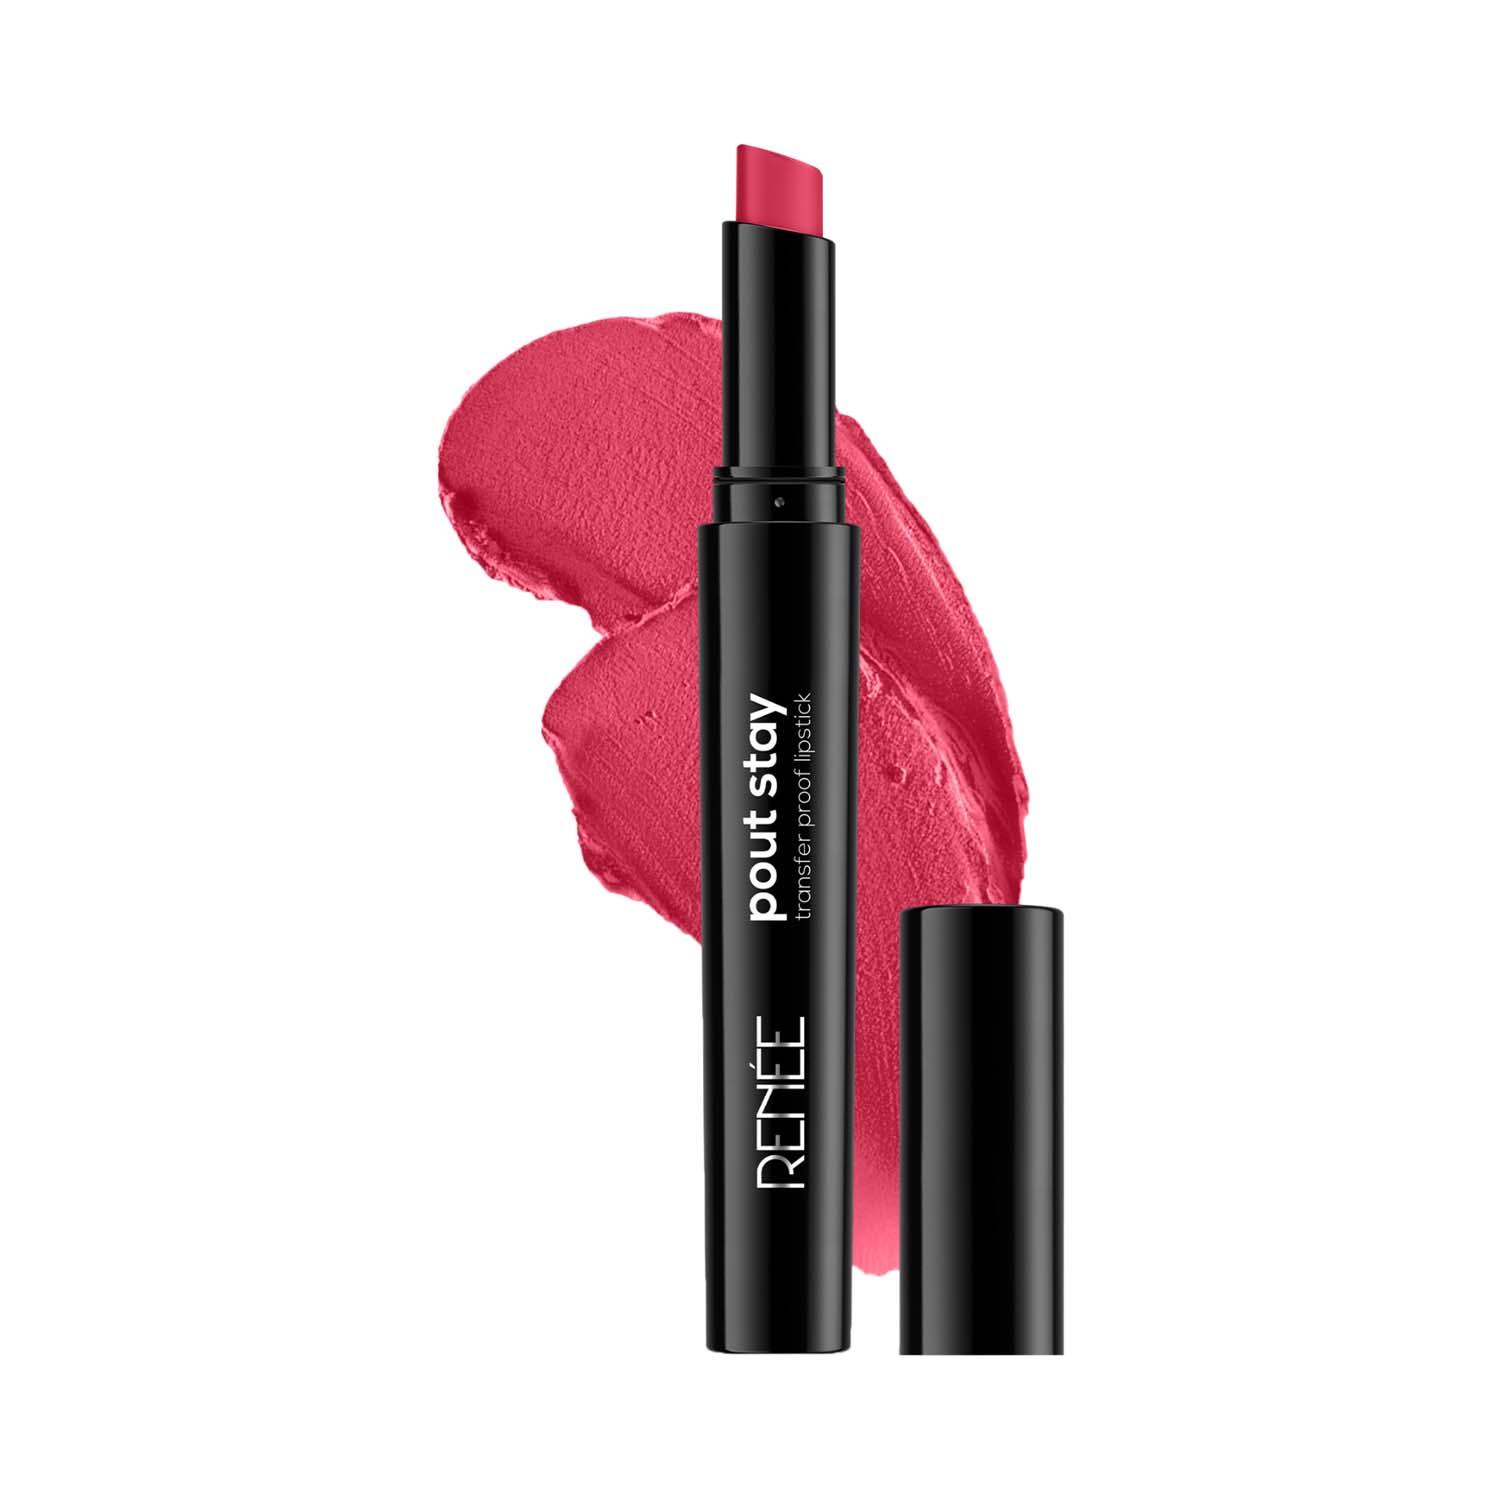 RENEE | RENEE Poutstay Transfer Proof Lipstick - 03 Aria (2 g)